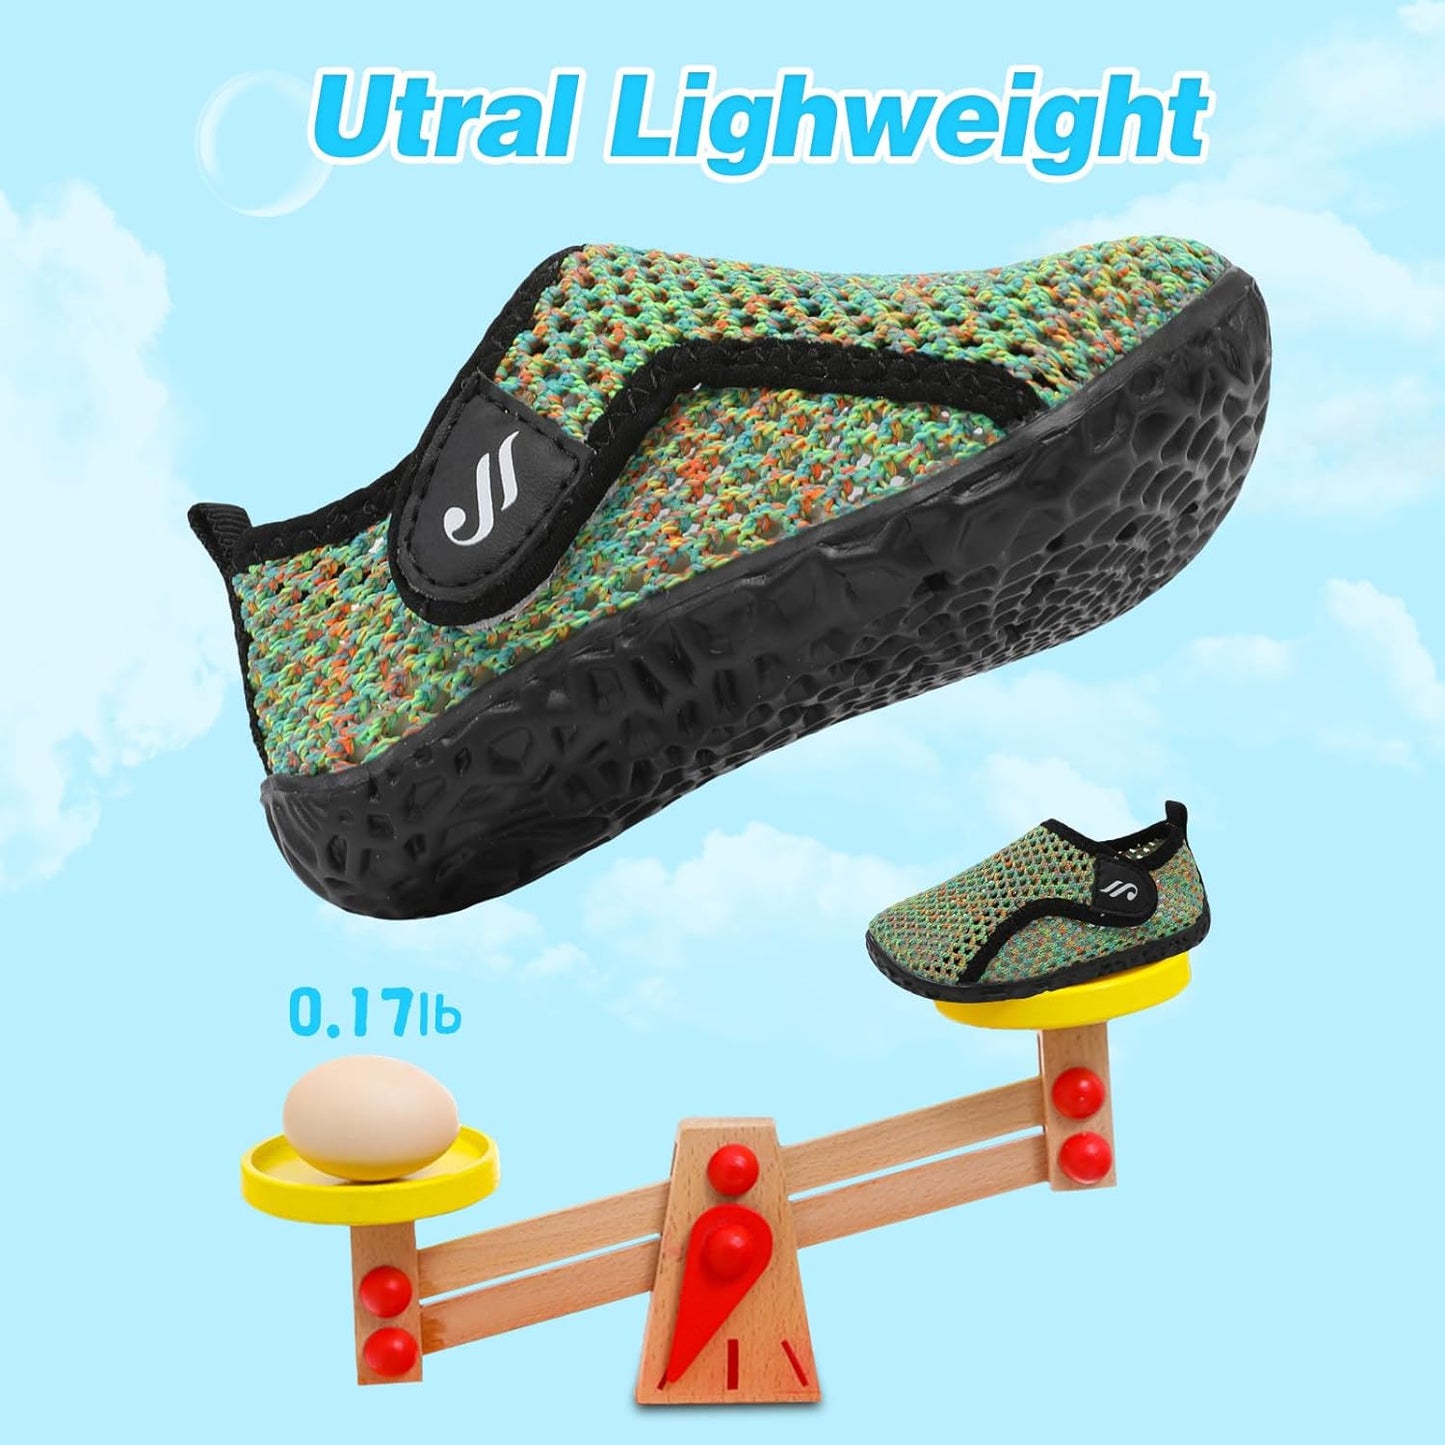 JIASUQI Baby Boys Girls Barefoot Swim Pool Water Shoes Beach Walking Sandals Athletic Sneakers